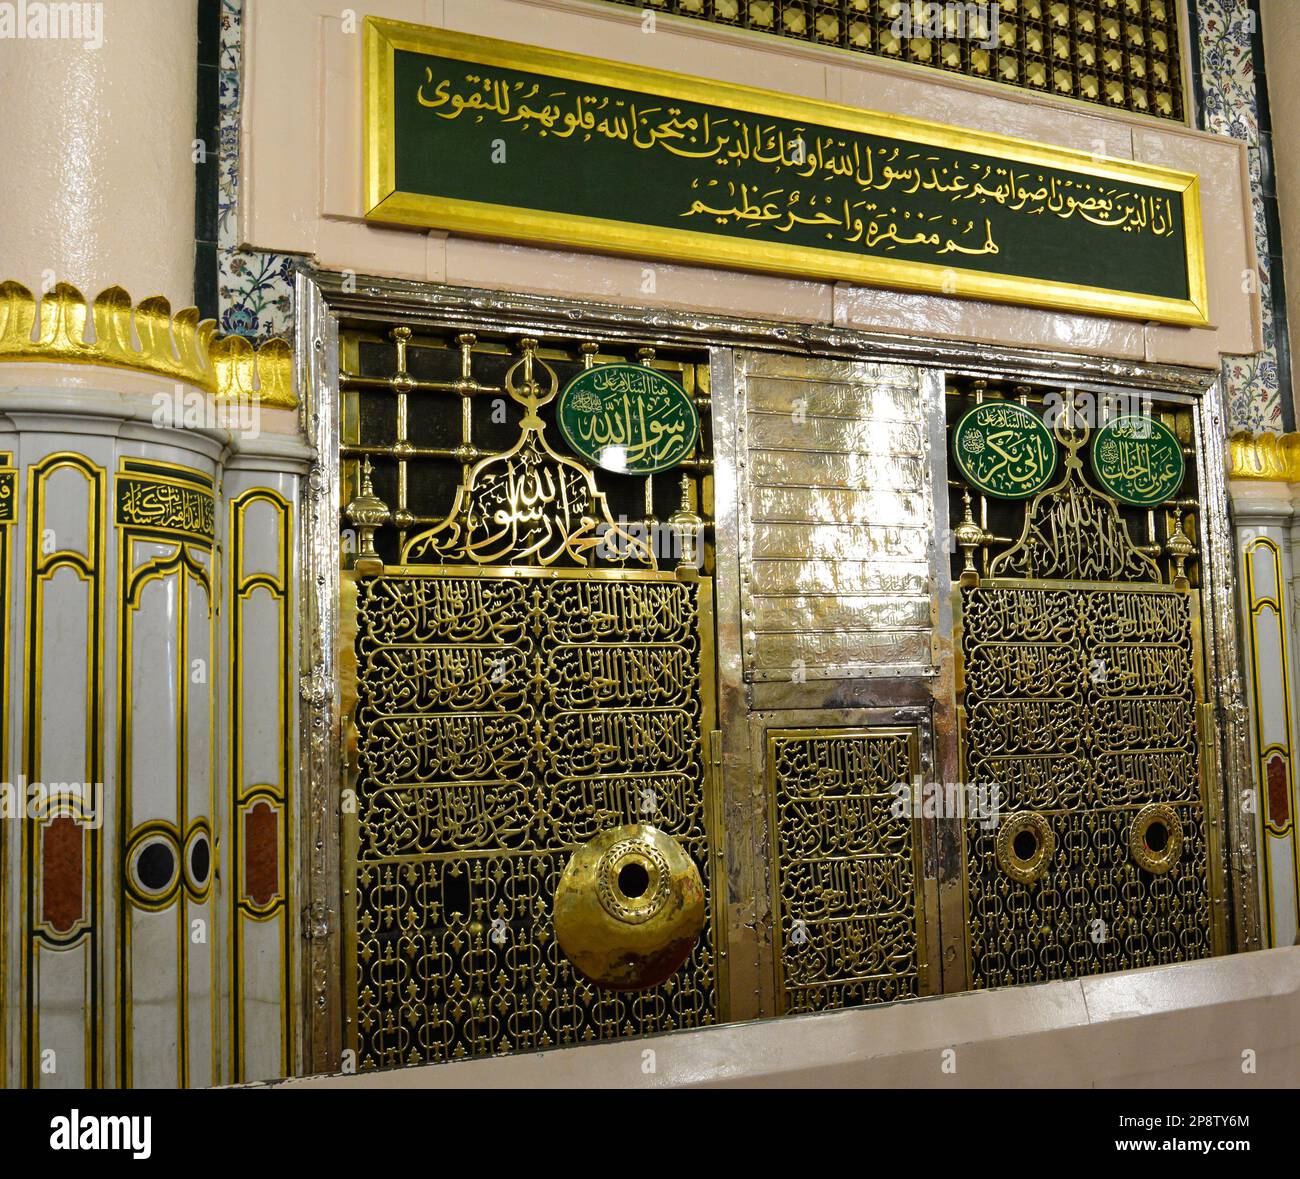 Medina , Saudi Arabia Jun 8 2015: Prophet Mohammed Mosque Peace be upon him PBUH , inside Al Masjid an Nabawi - Rawdah Mubarak Riadhul Jannah mehrab Stock Photo